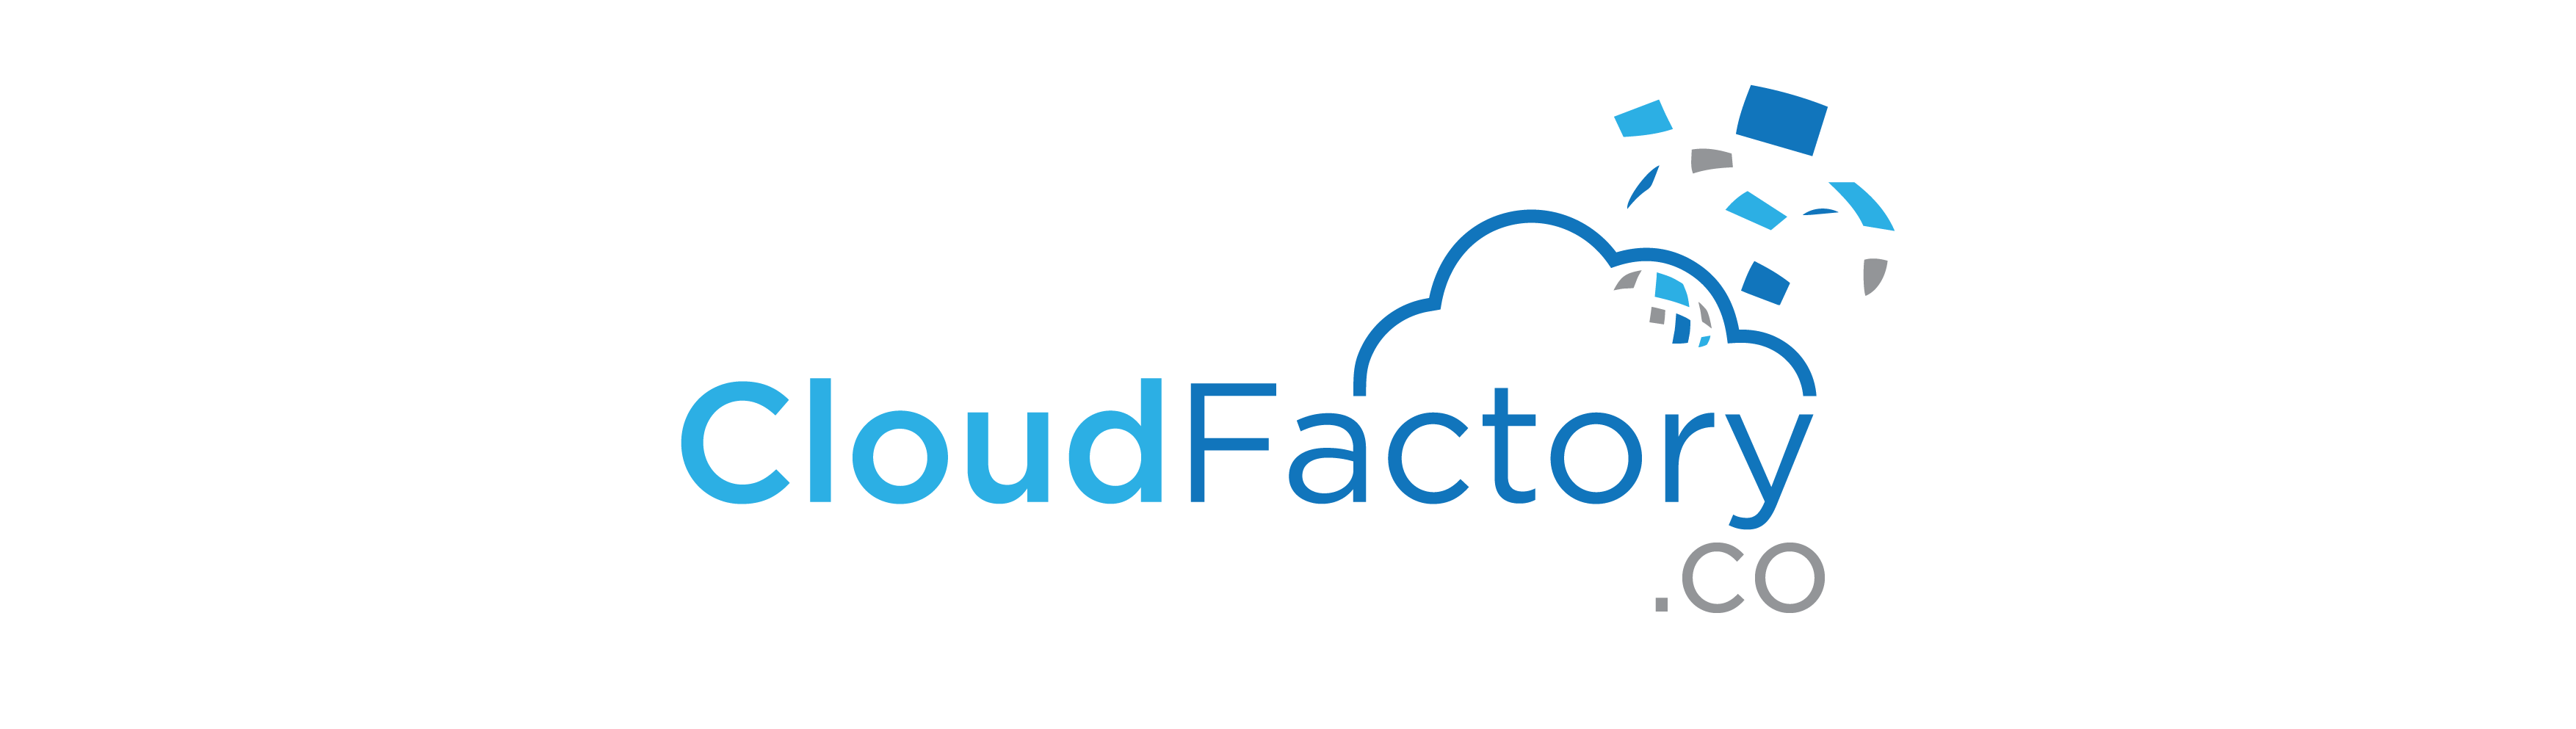 Cloud Factory Logo White BG-01